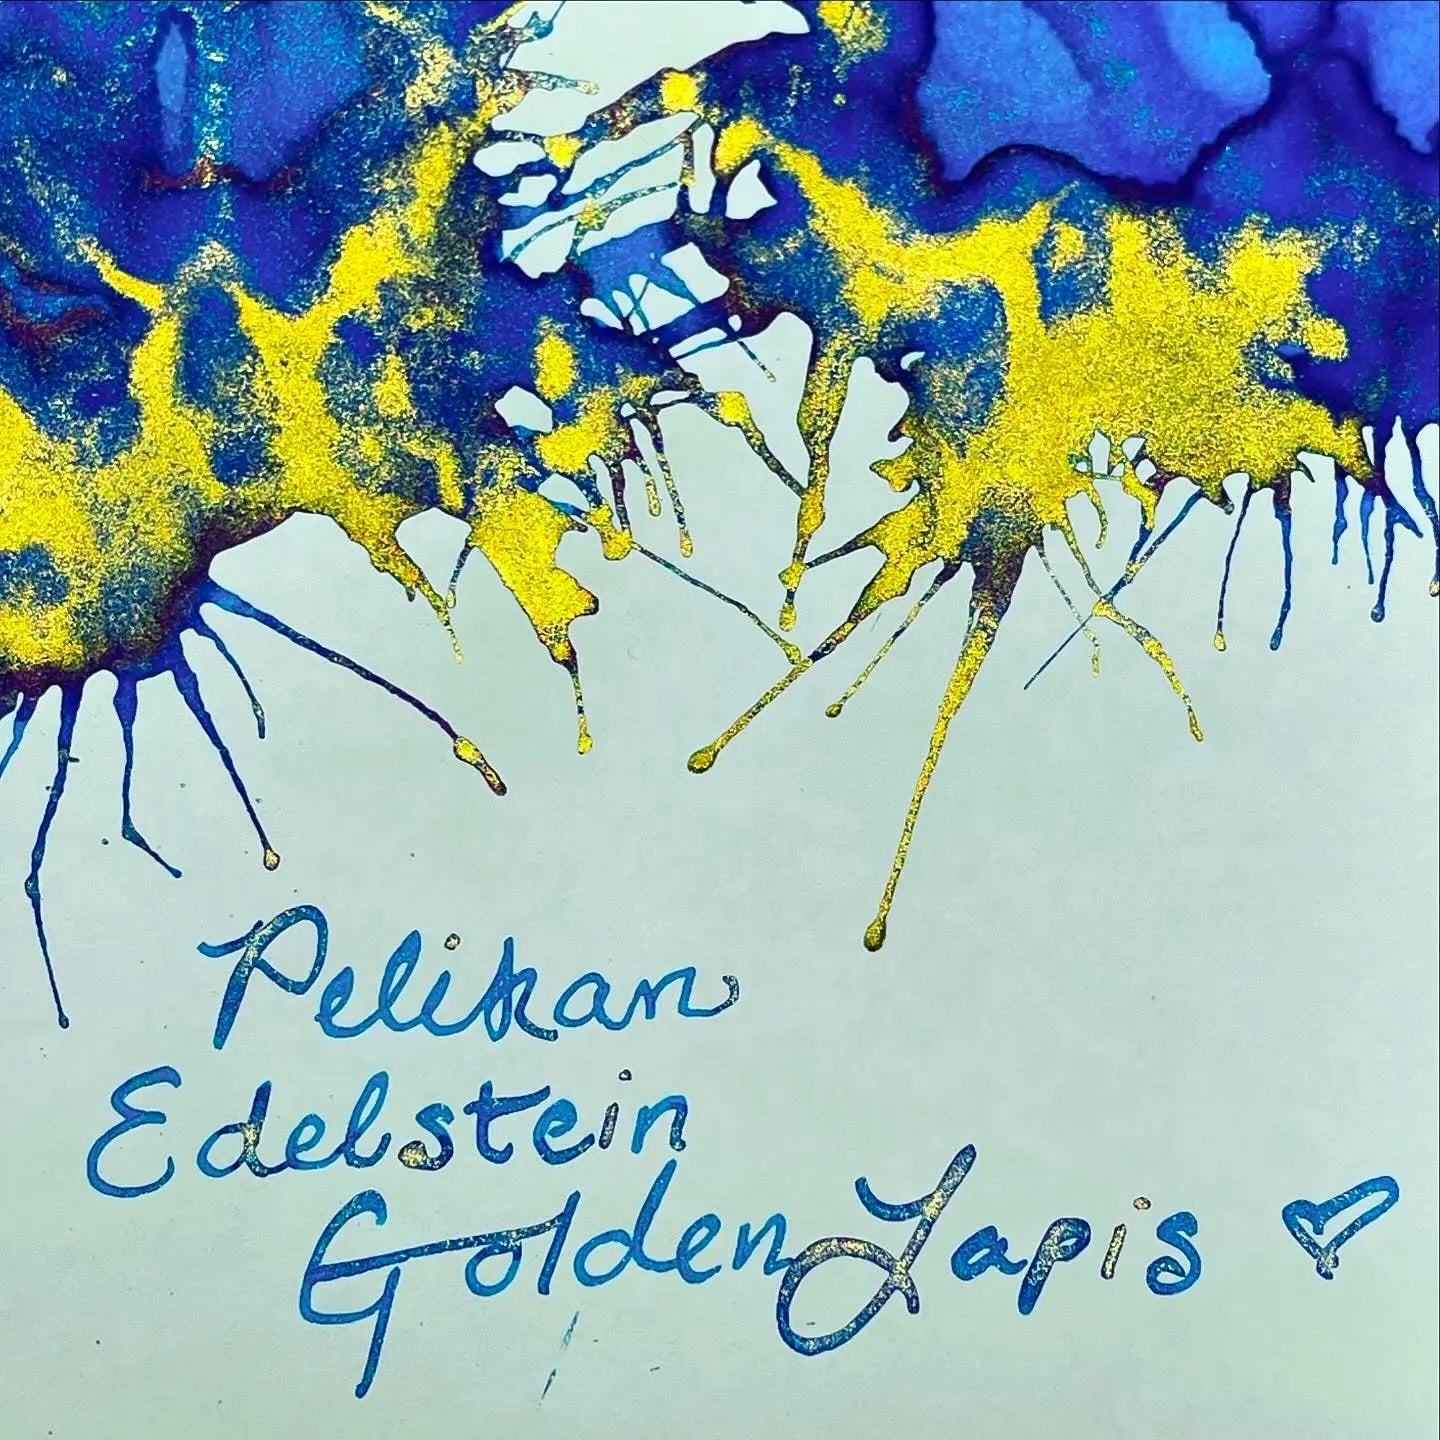 Pelikan Edelstein Ink Bottle - Golden Lapis - Ink Of The Year 2024 Pelikan-Pens